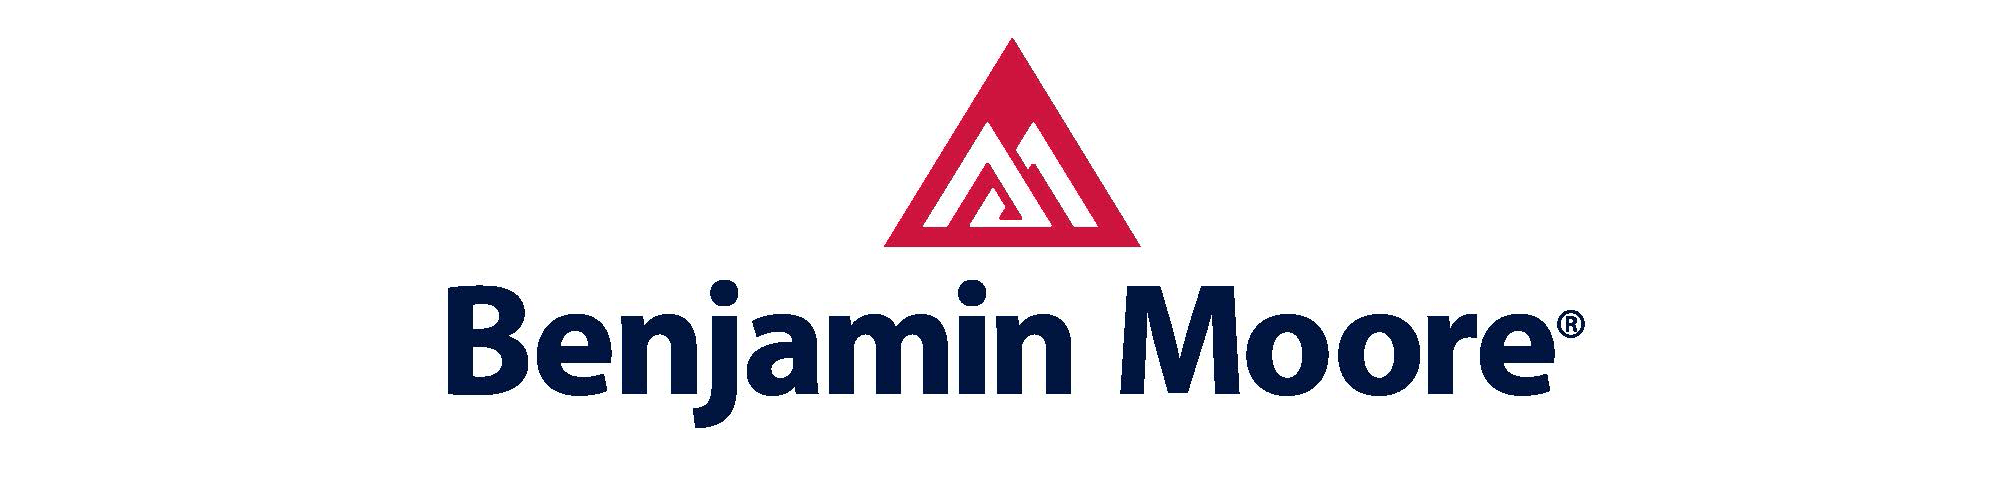 Benjamin Supply Logo photo - 1